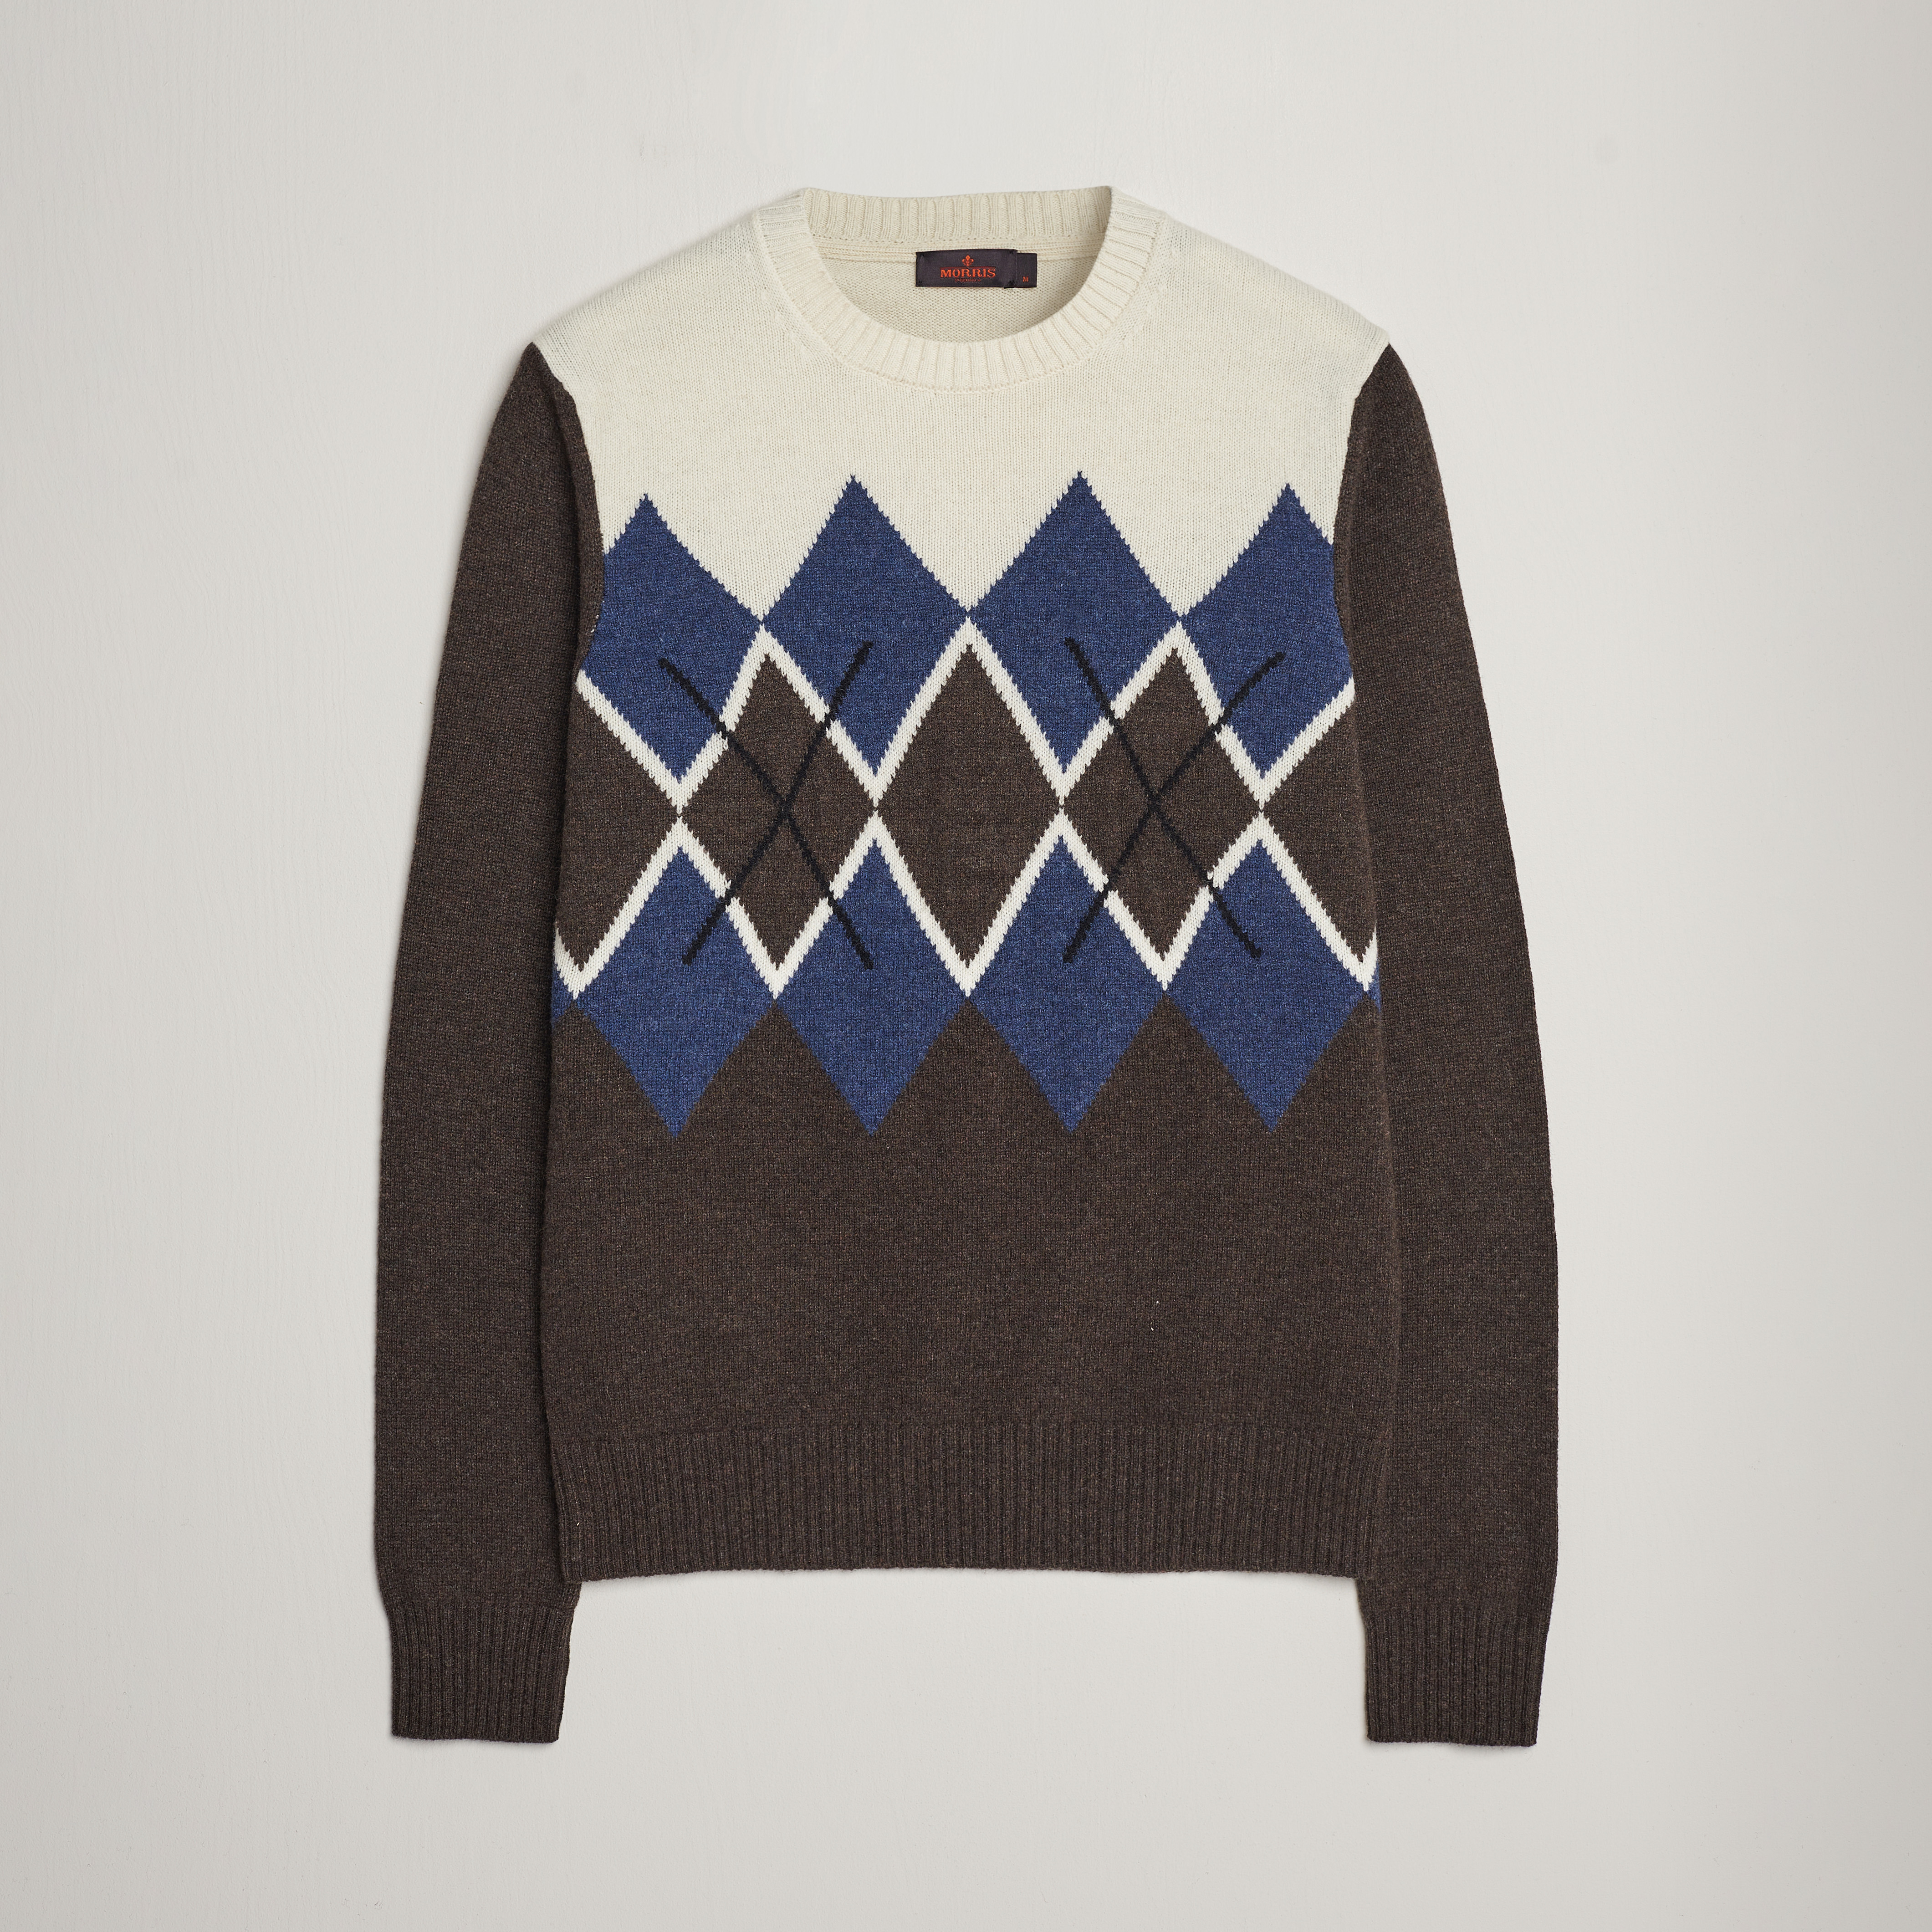 VTG Woods & Gray Argyle Sweater Mens L Knit Crew Neck Tan Blue Brown Gray  L/S